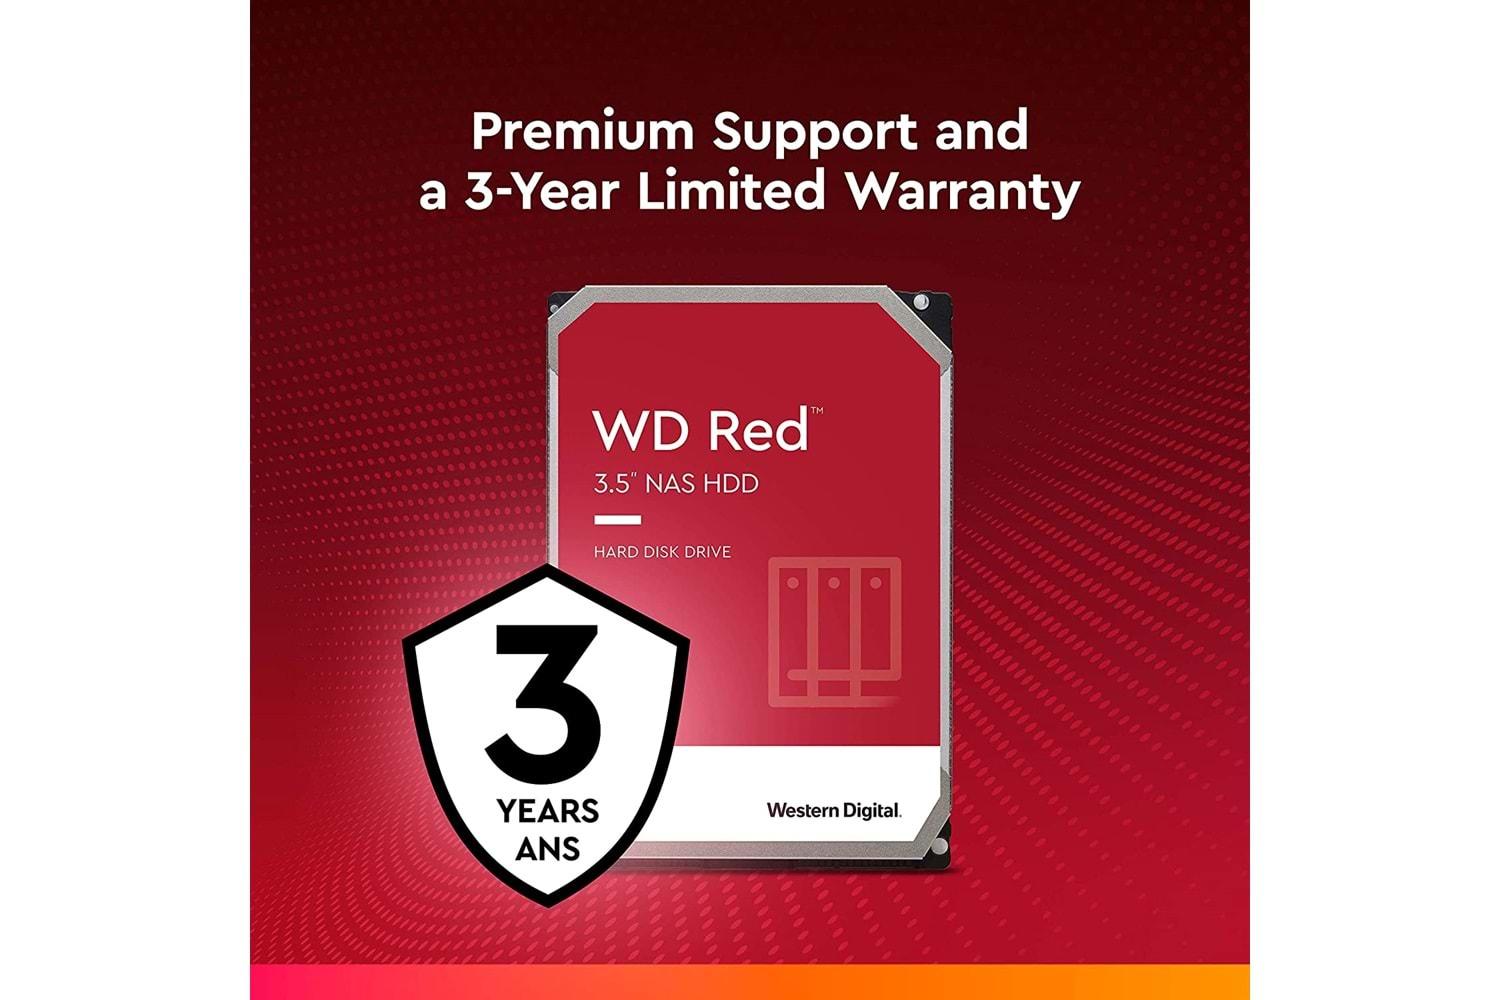 WD Desk Red WD60EFAX 6 TB 3.5